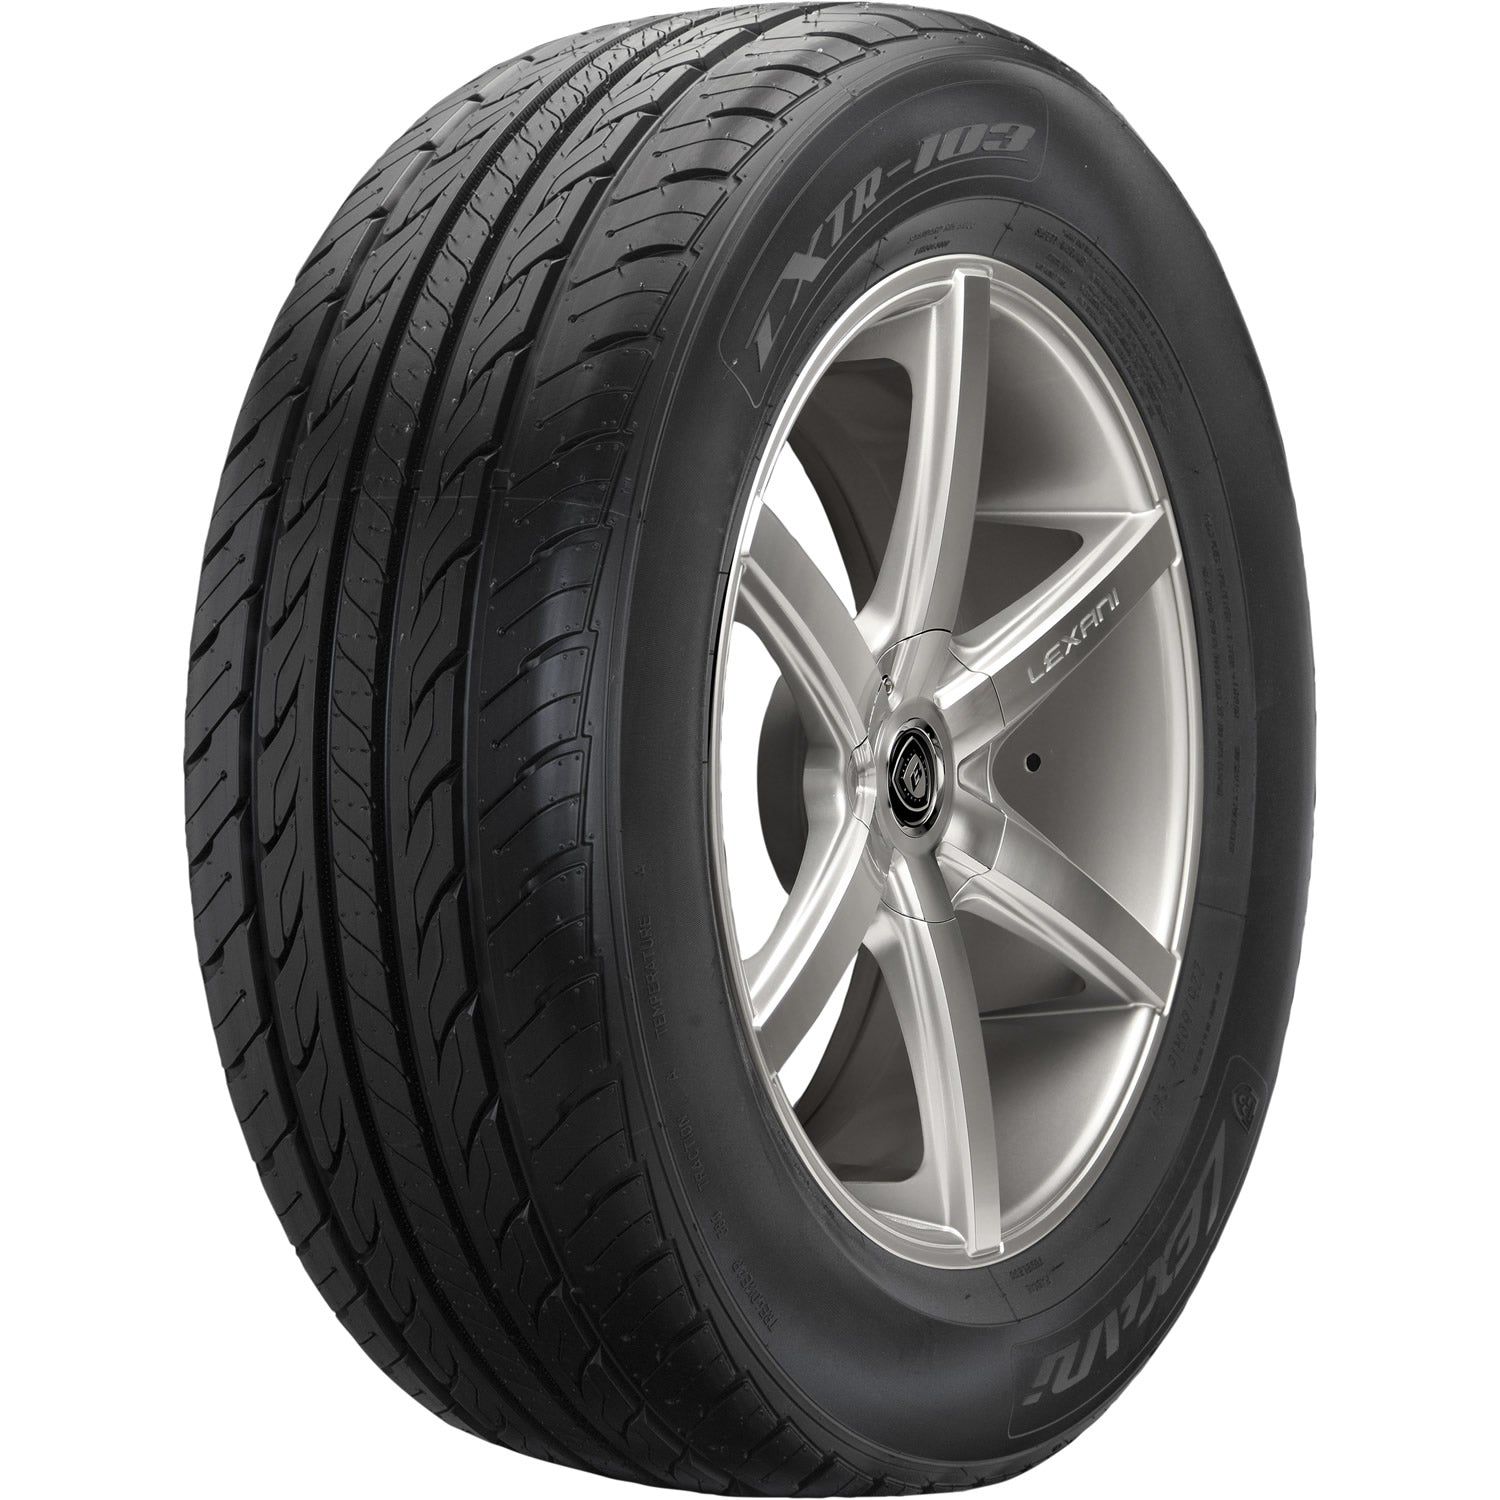 LEXANI LXTR-103 205/60R16 (25.7X8.2R 16) Tires